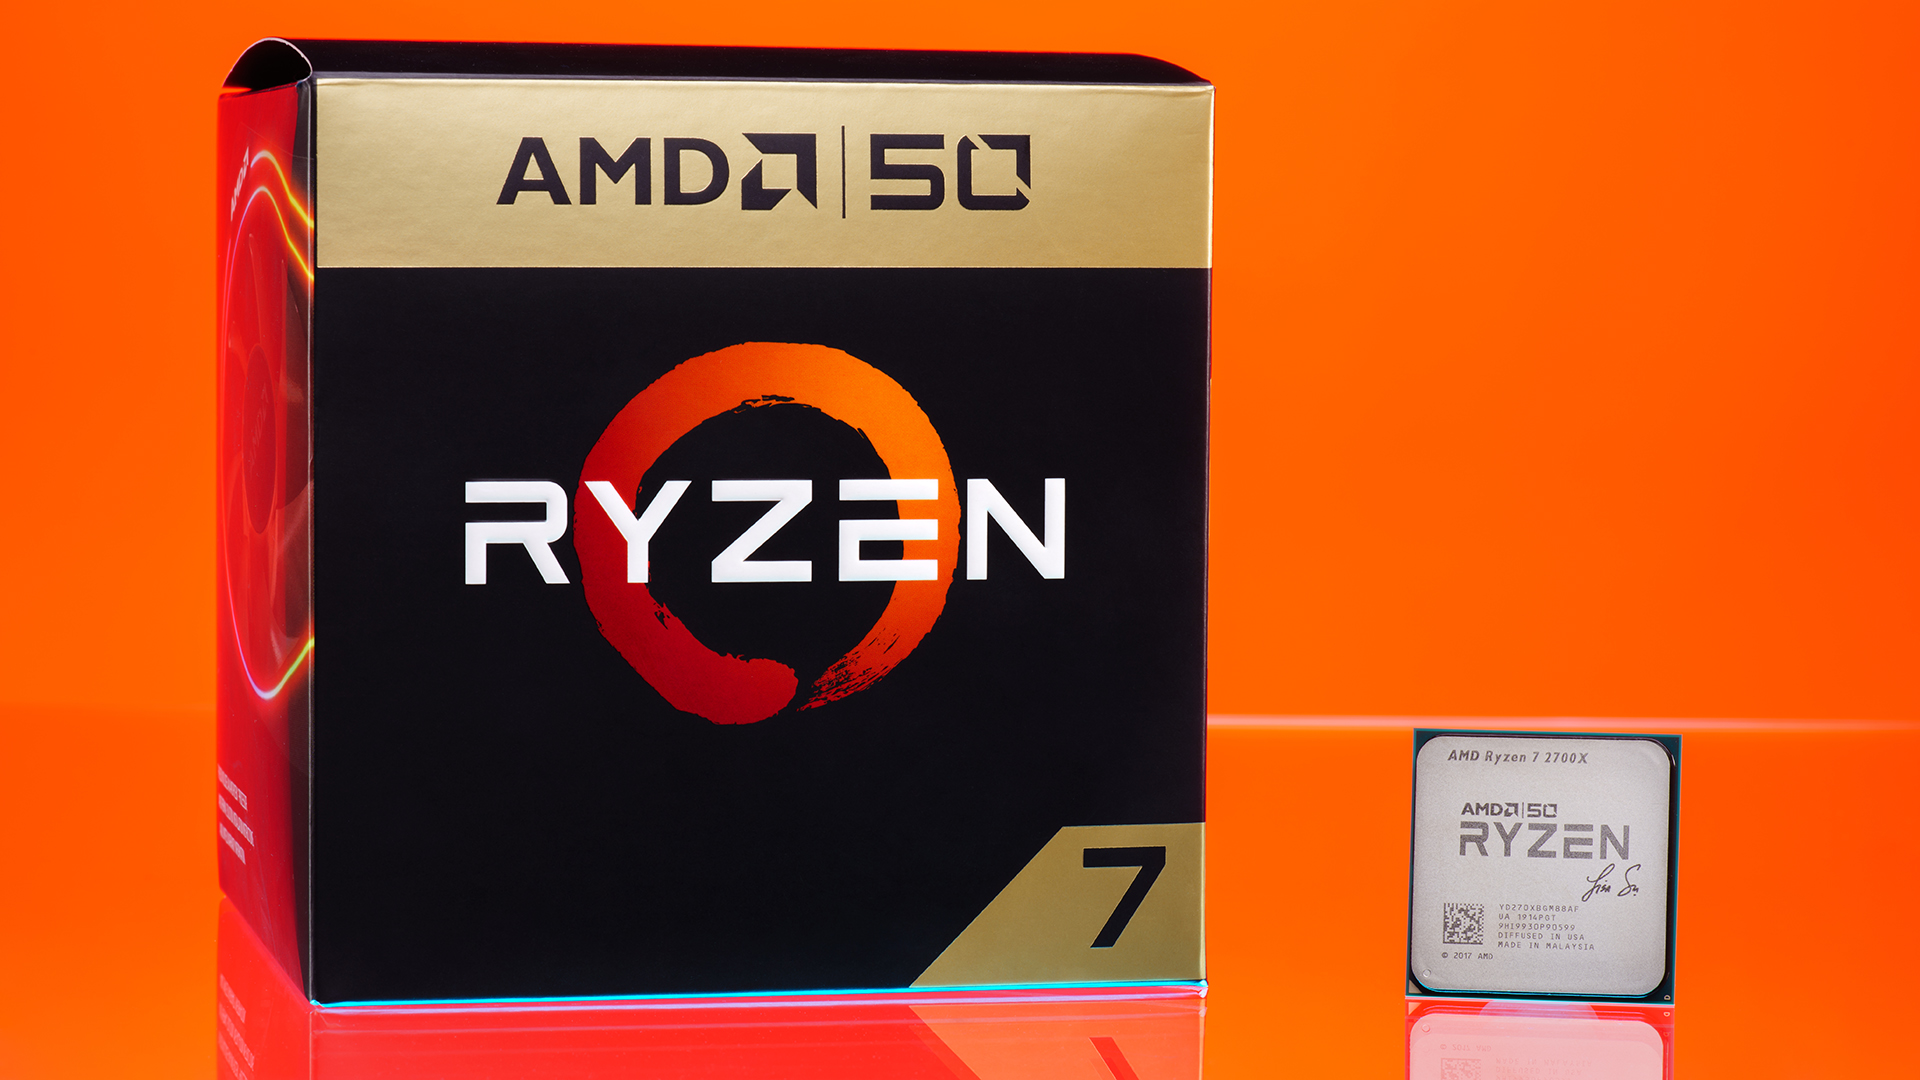 7 2700 купить. Ryzen 7 2700. AMD Ryzen 7 2700x. Ryzen 7 2700x Gold Edition. AMD Ryzen 7 2700x eight-Core Processor 3.70 GHZ.